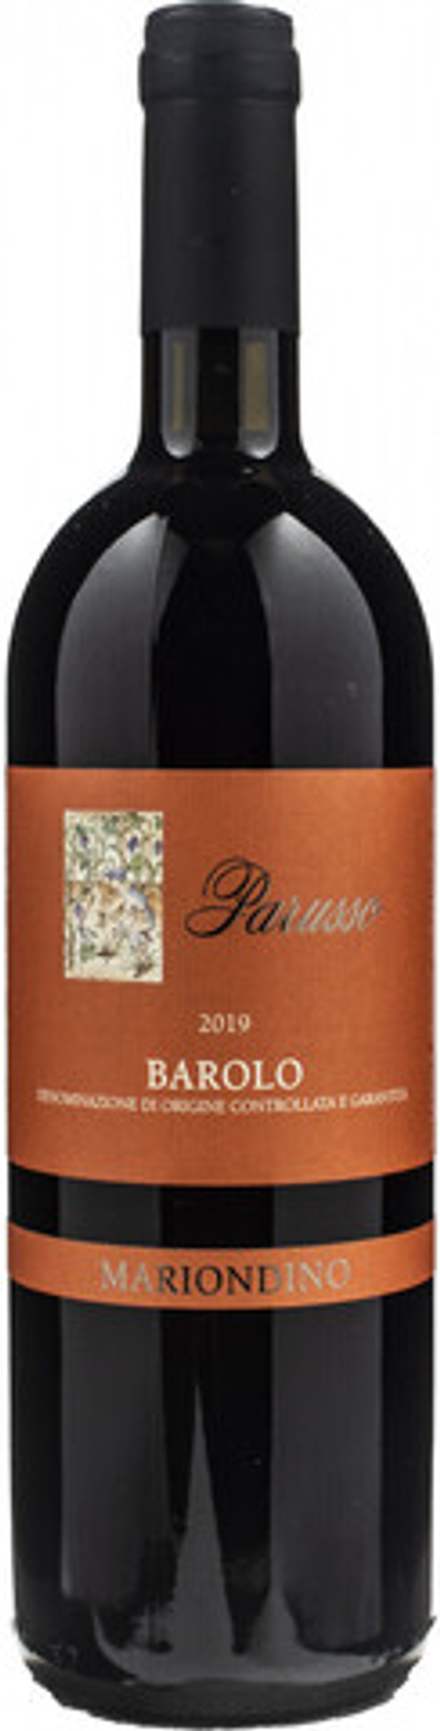 Вино Parusso Barolo Mariondino, 0,75 л.